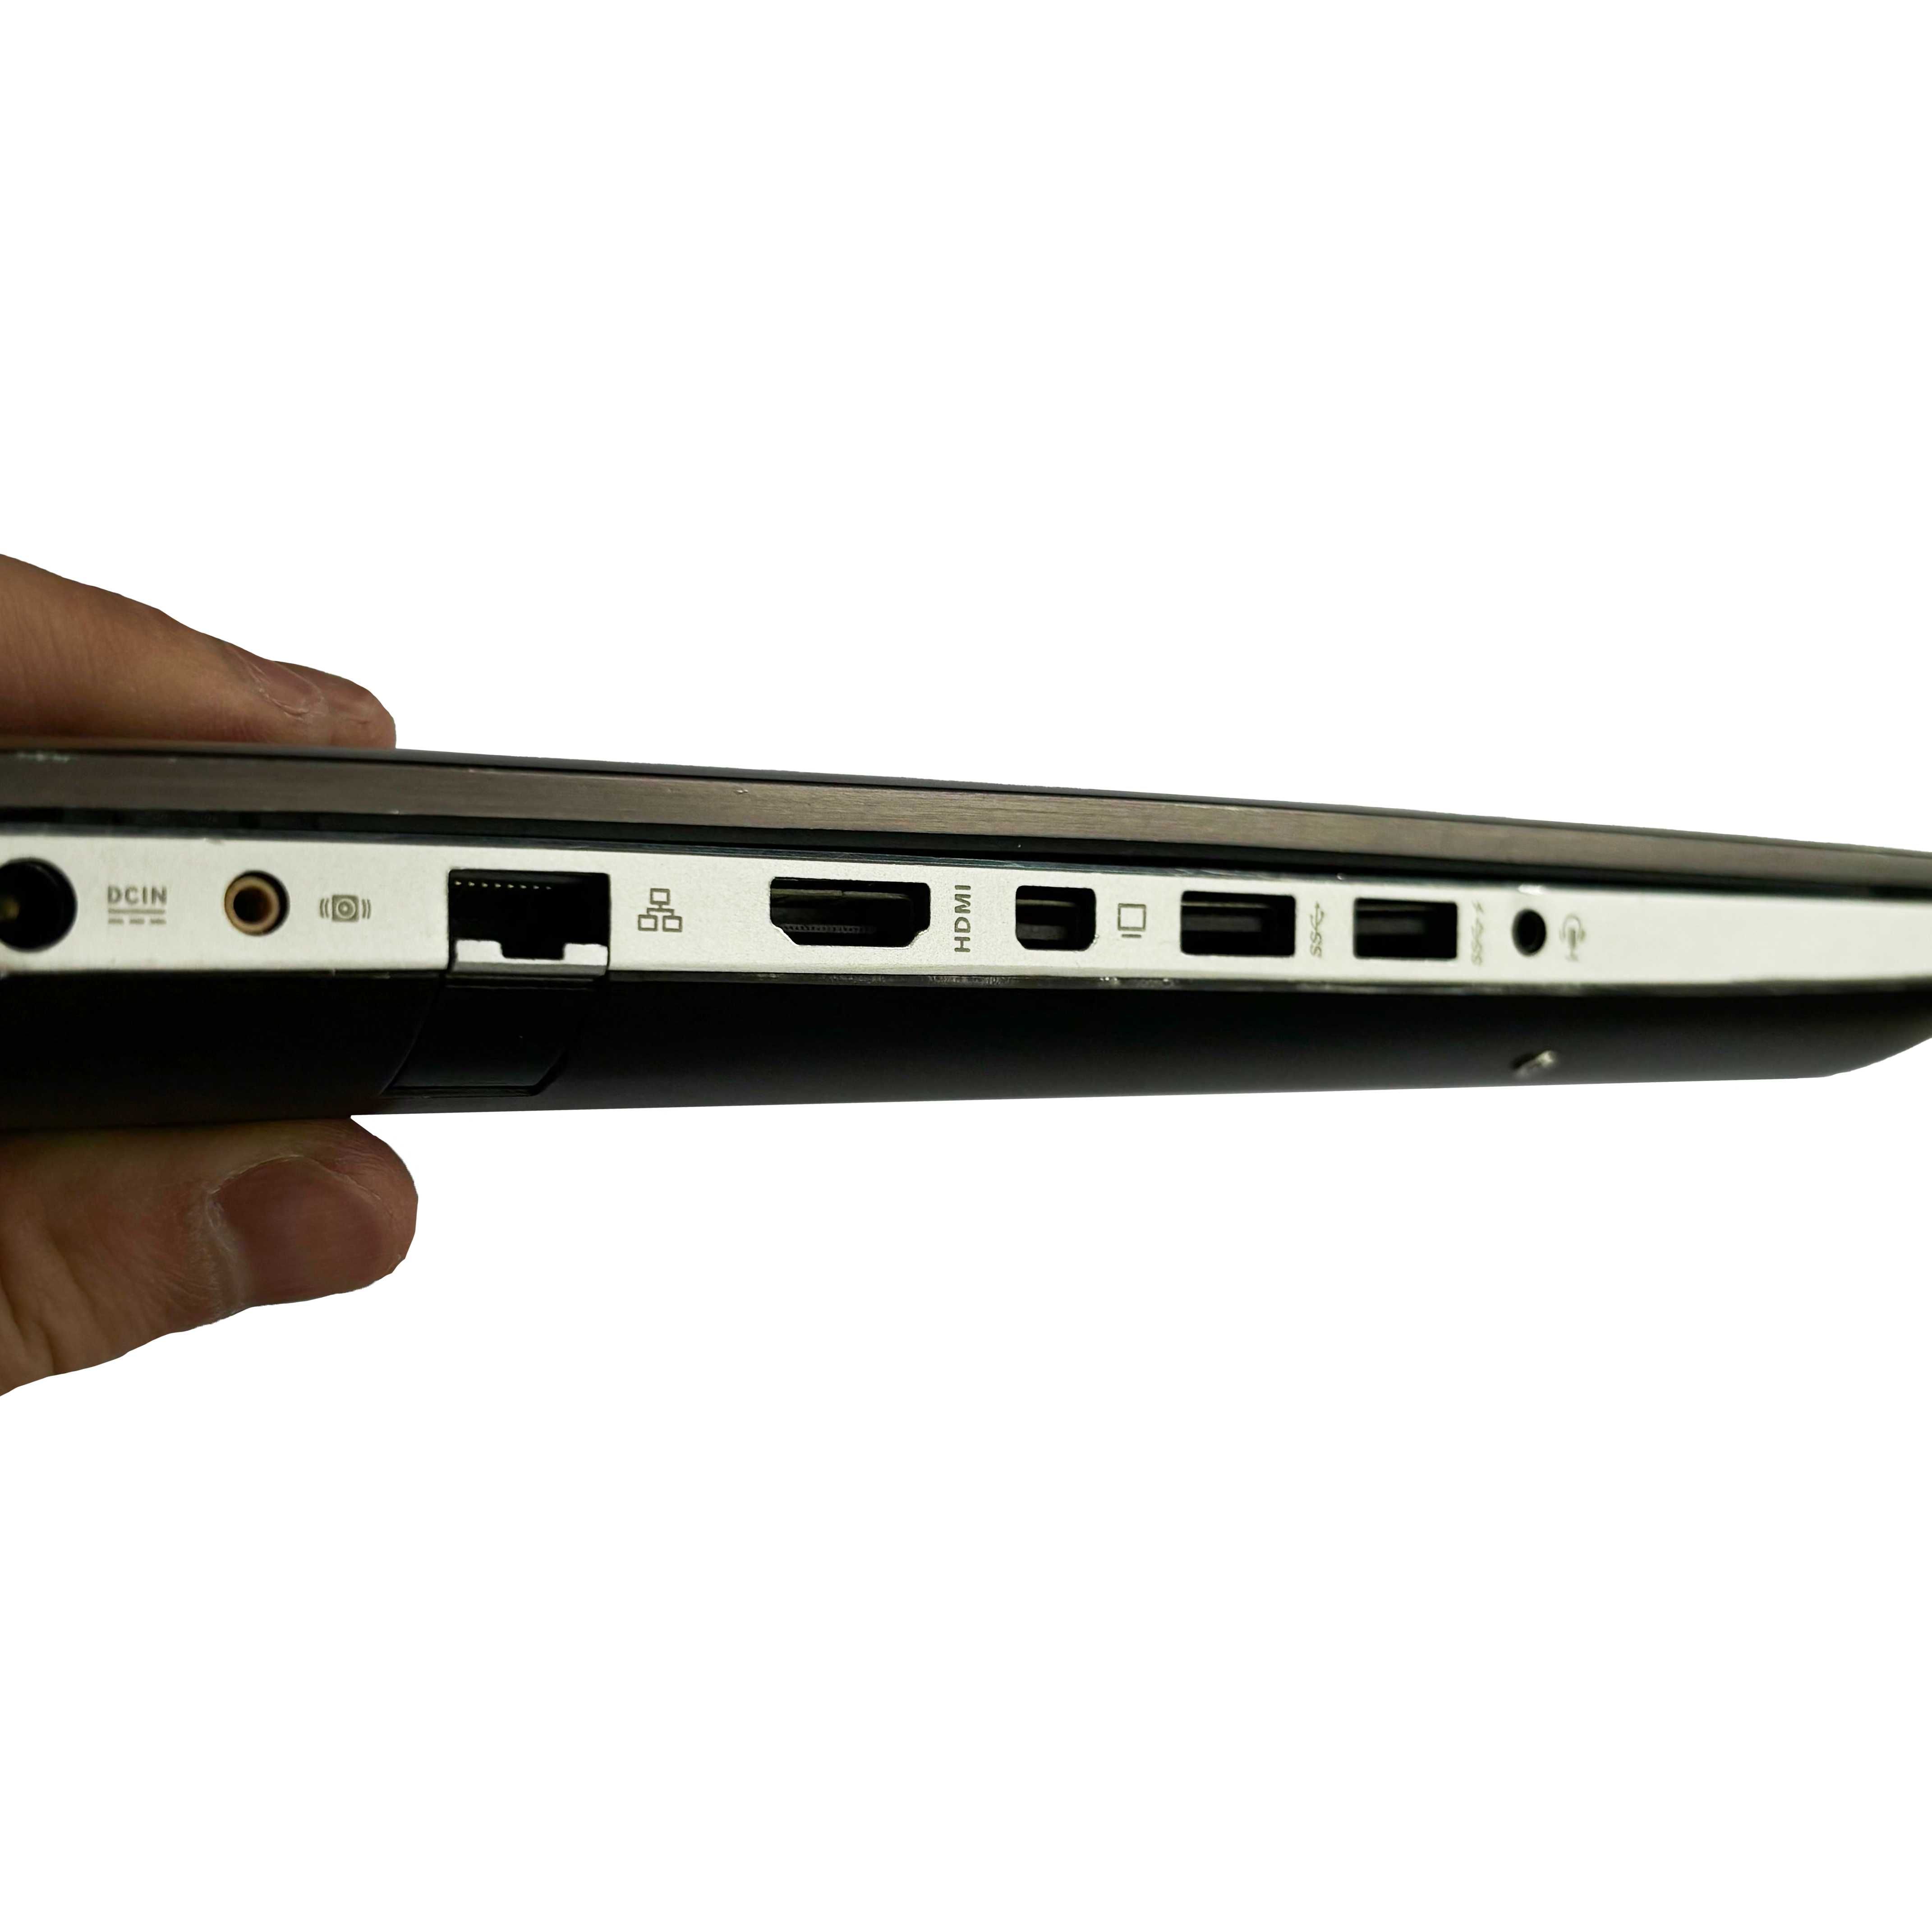 ASUS N550J 15.6-Inch Laptop